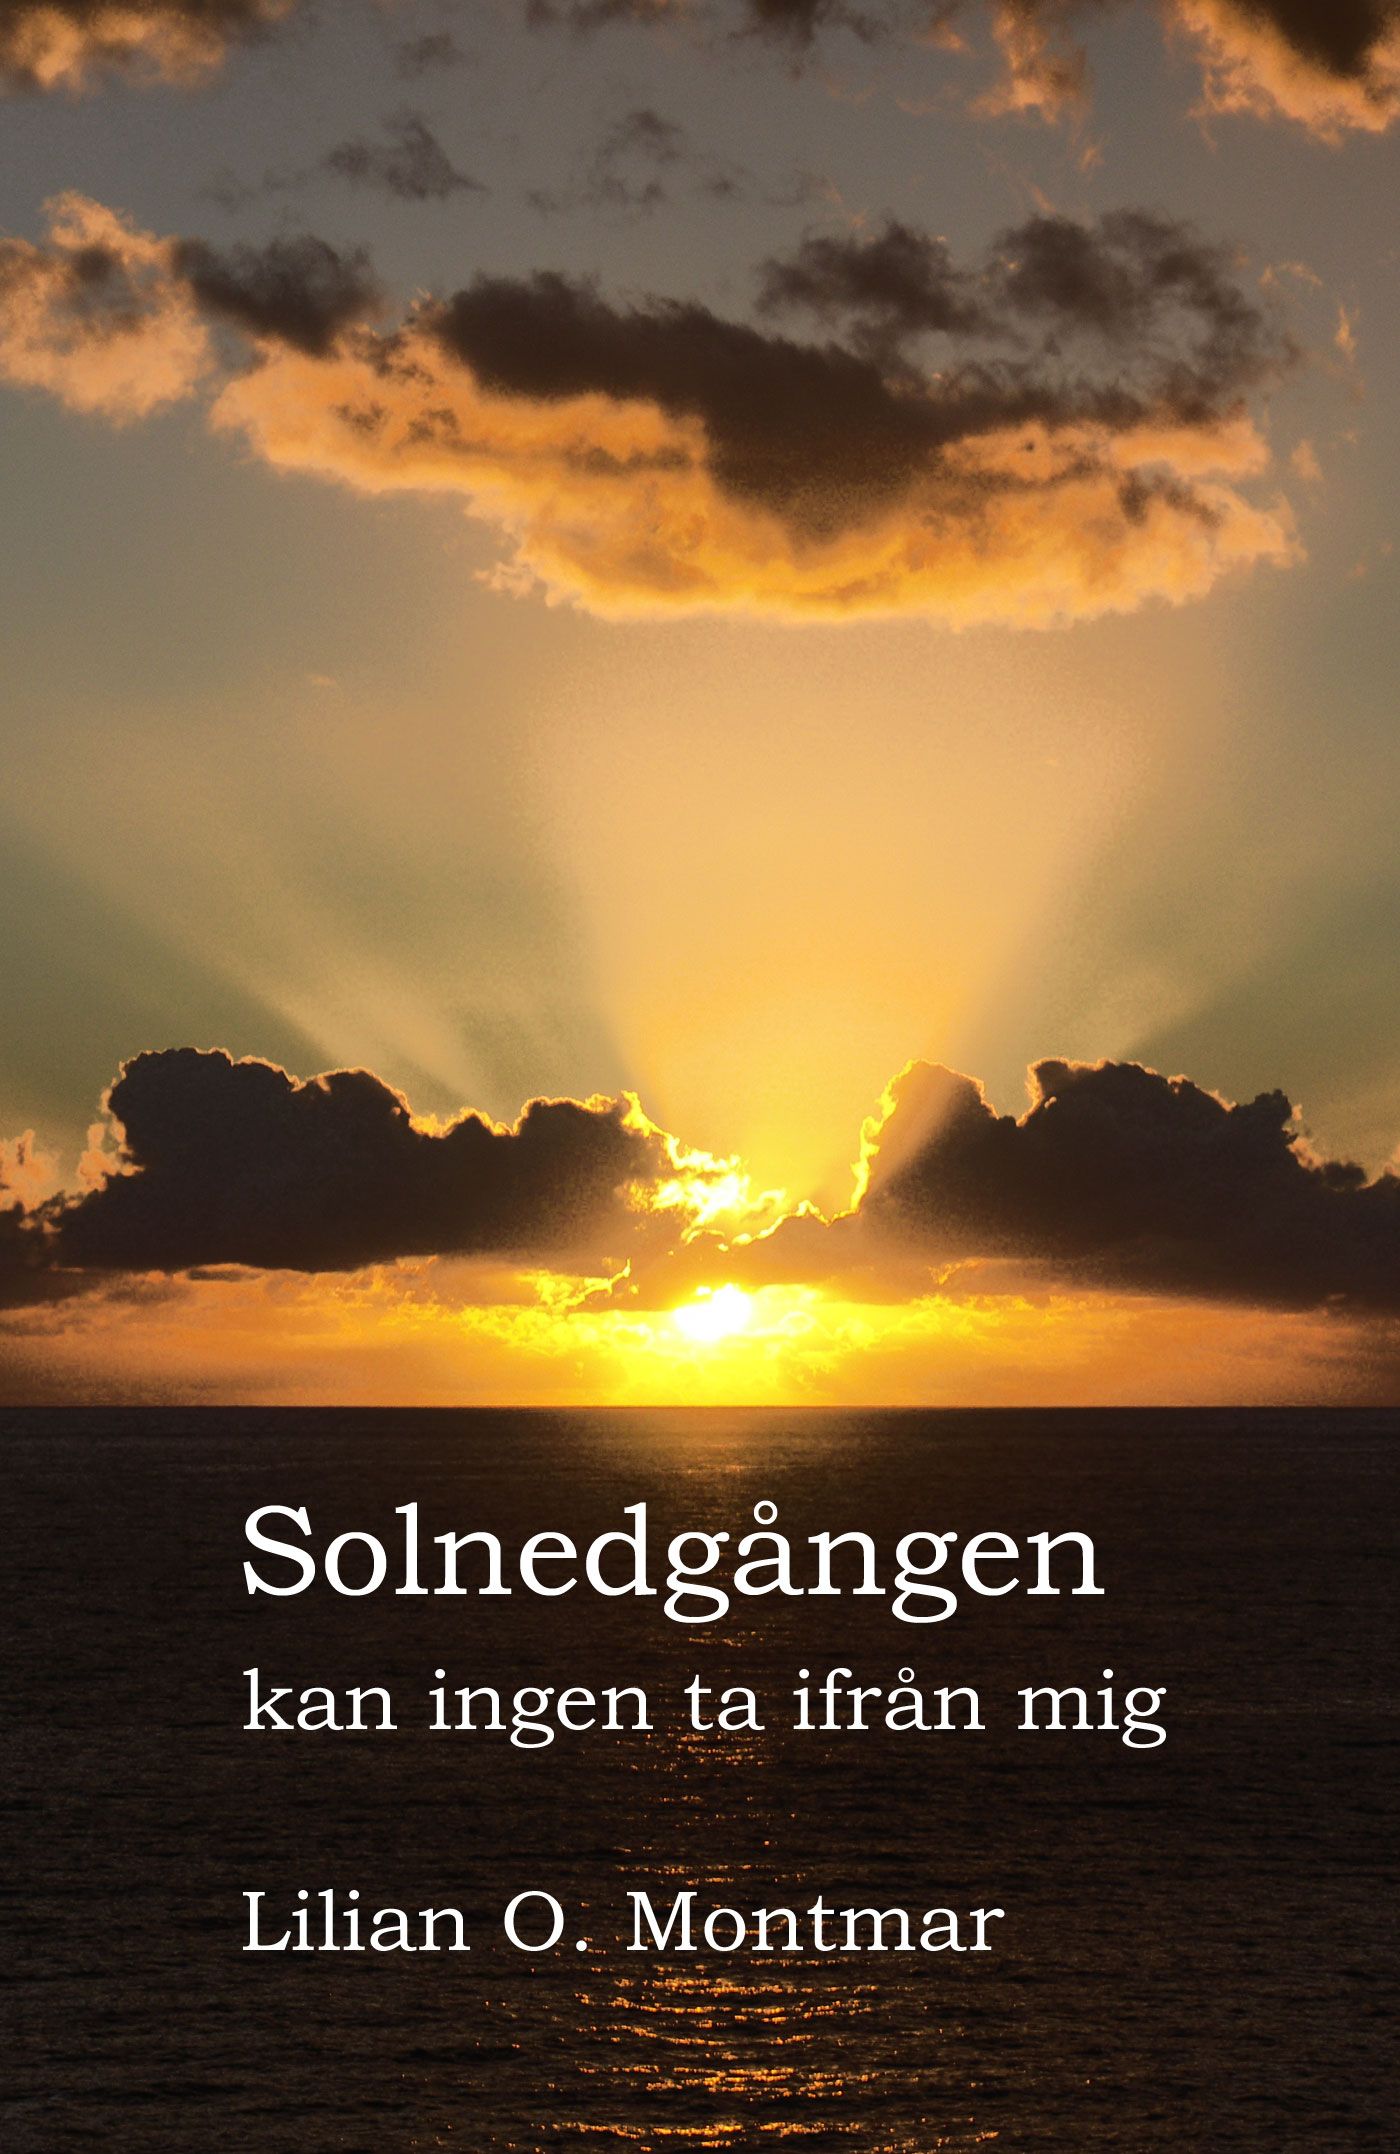 Solnedgången kan ingen ta ifrån mig, audiobook by Lilian O. Montmar